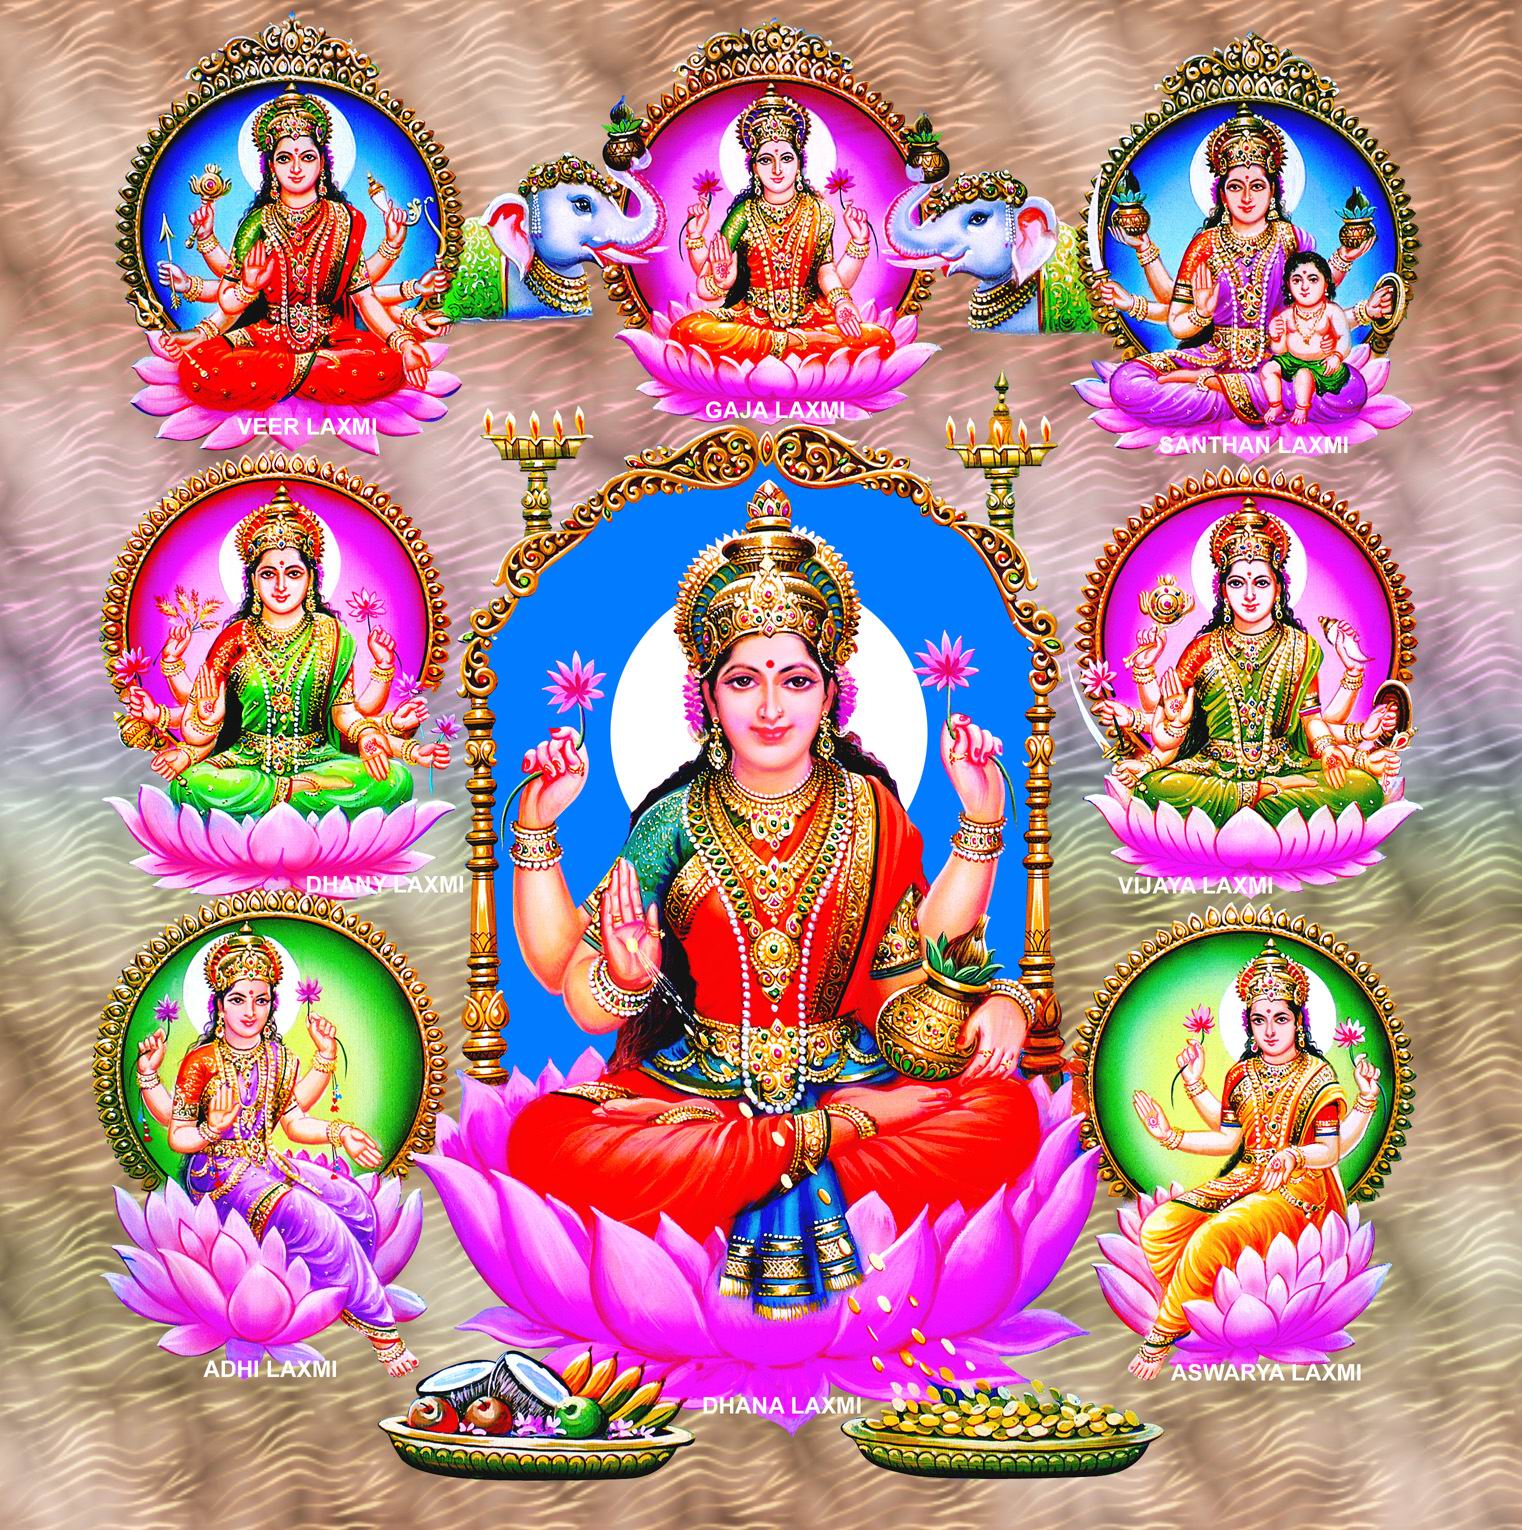 Good Morning Images With God Laxmi - 1522x1530 Wallpaper 